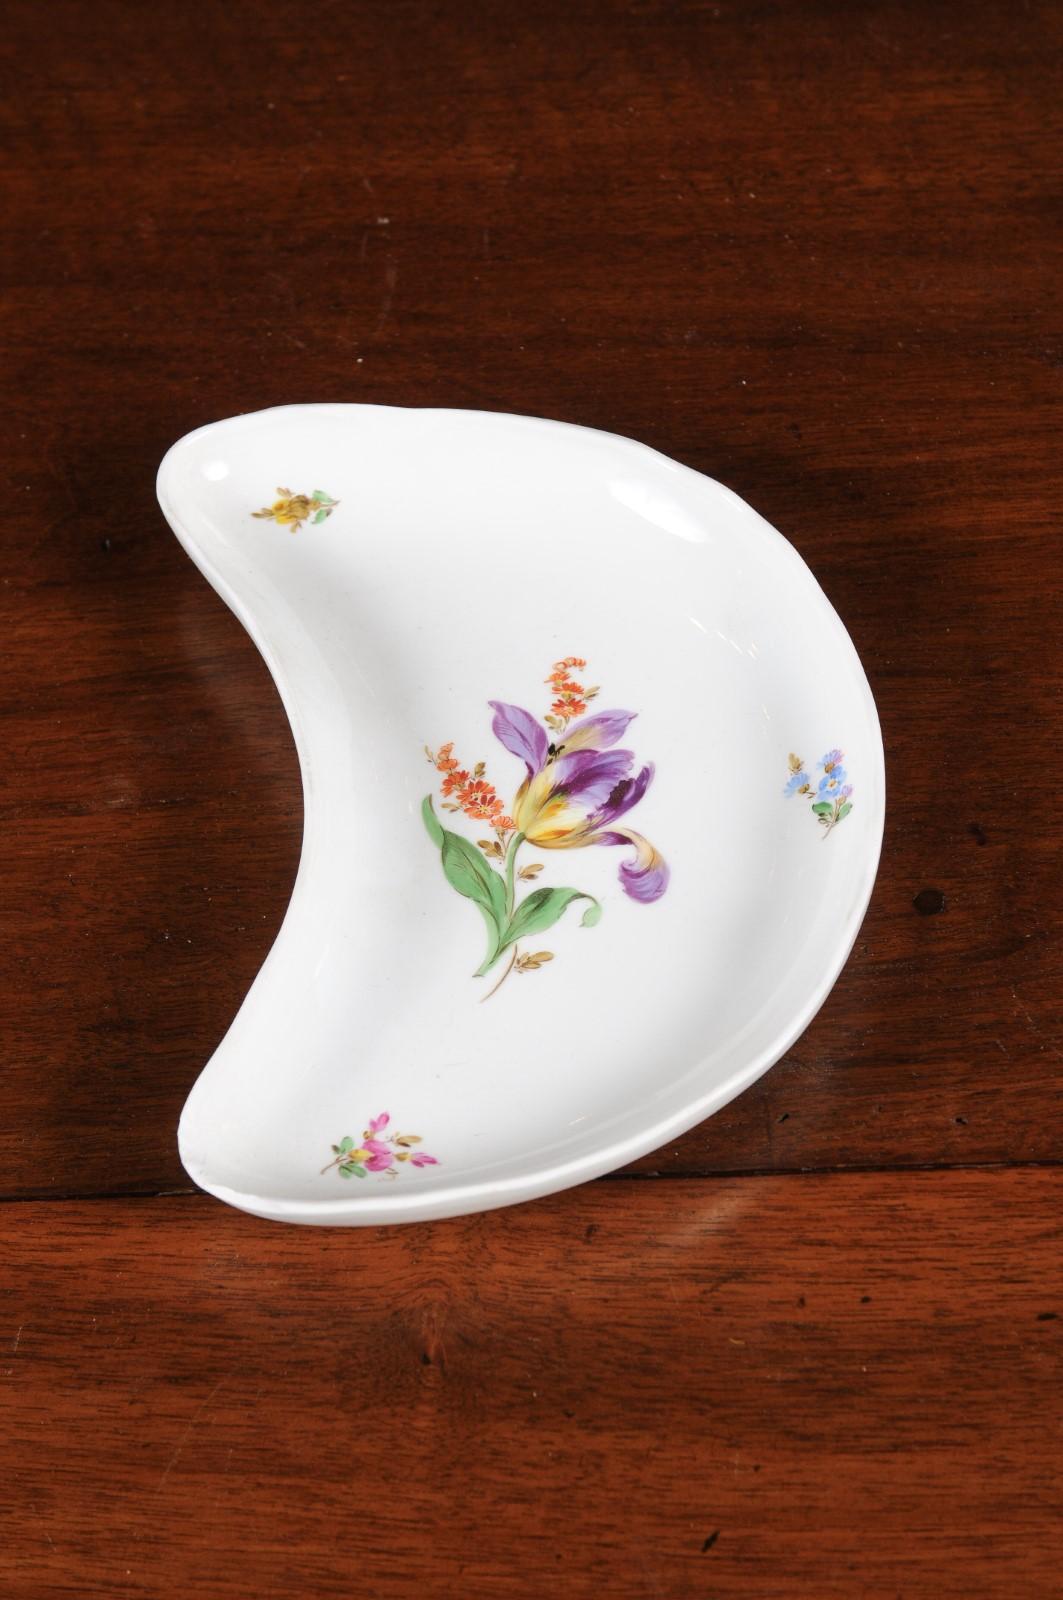 Set of 24 Pieces German Meissen Porcelain Dinner Service with Floral Decor For Sale 3